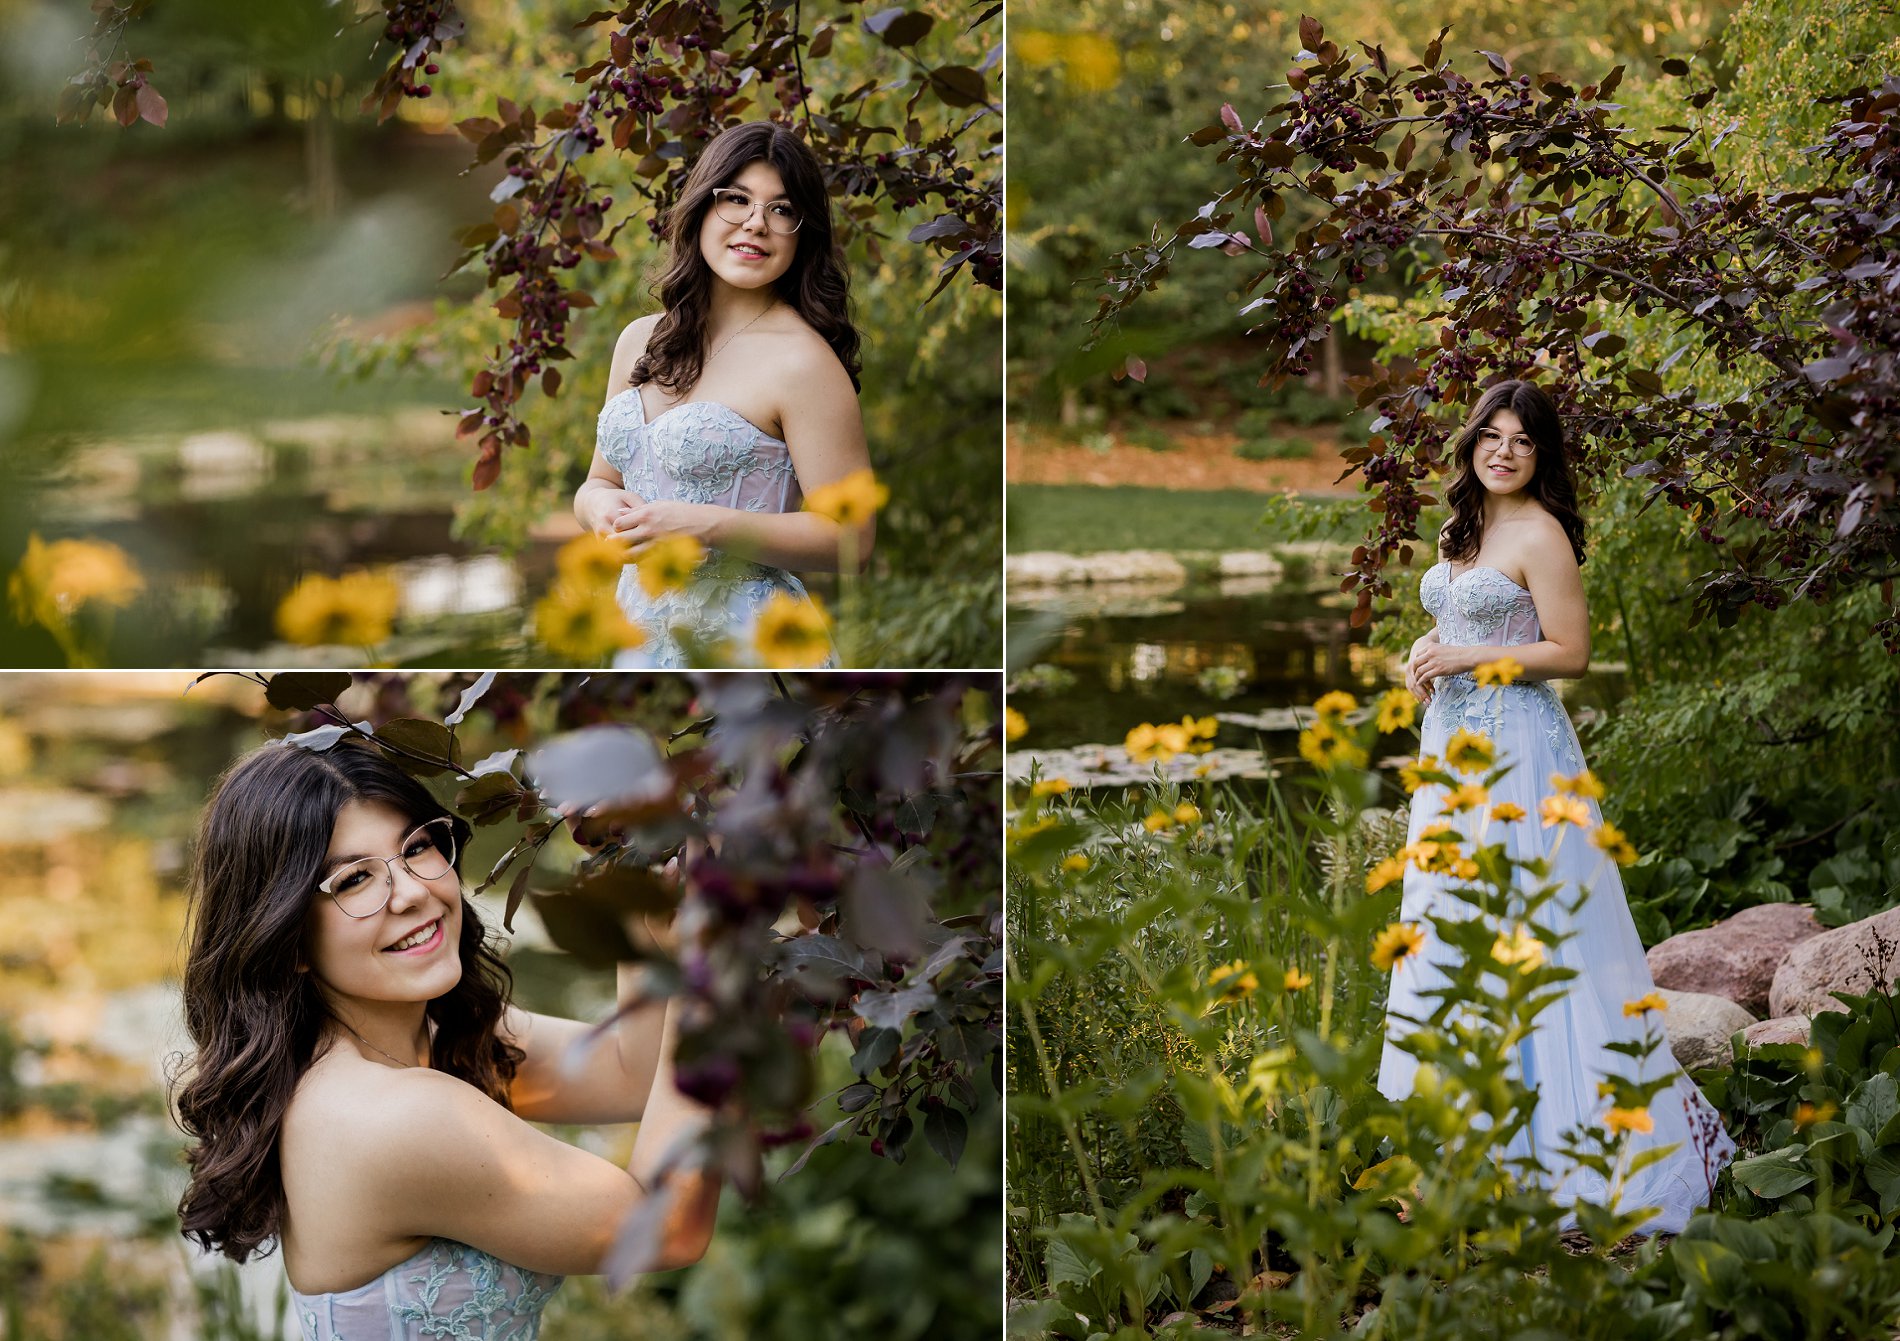 High school graduation photos in a beautiful garden